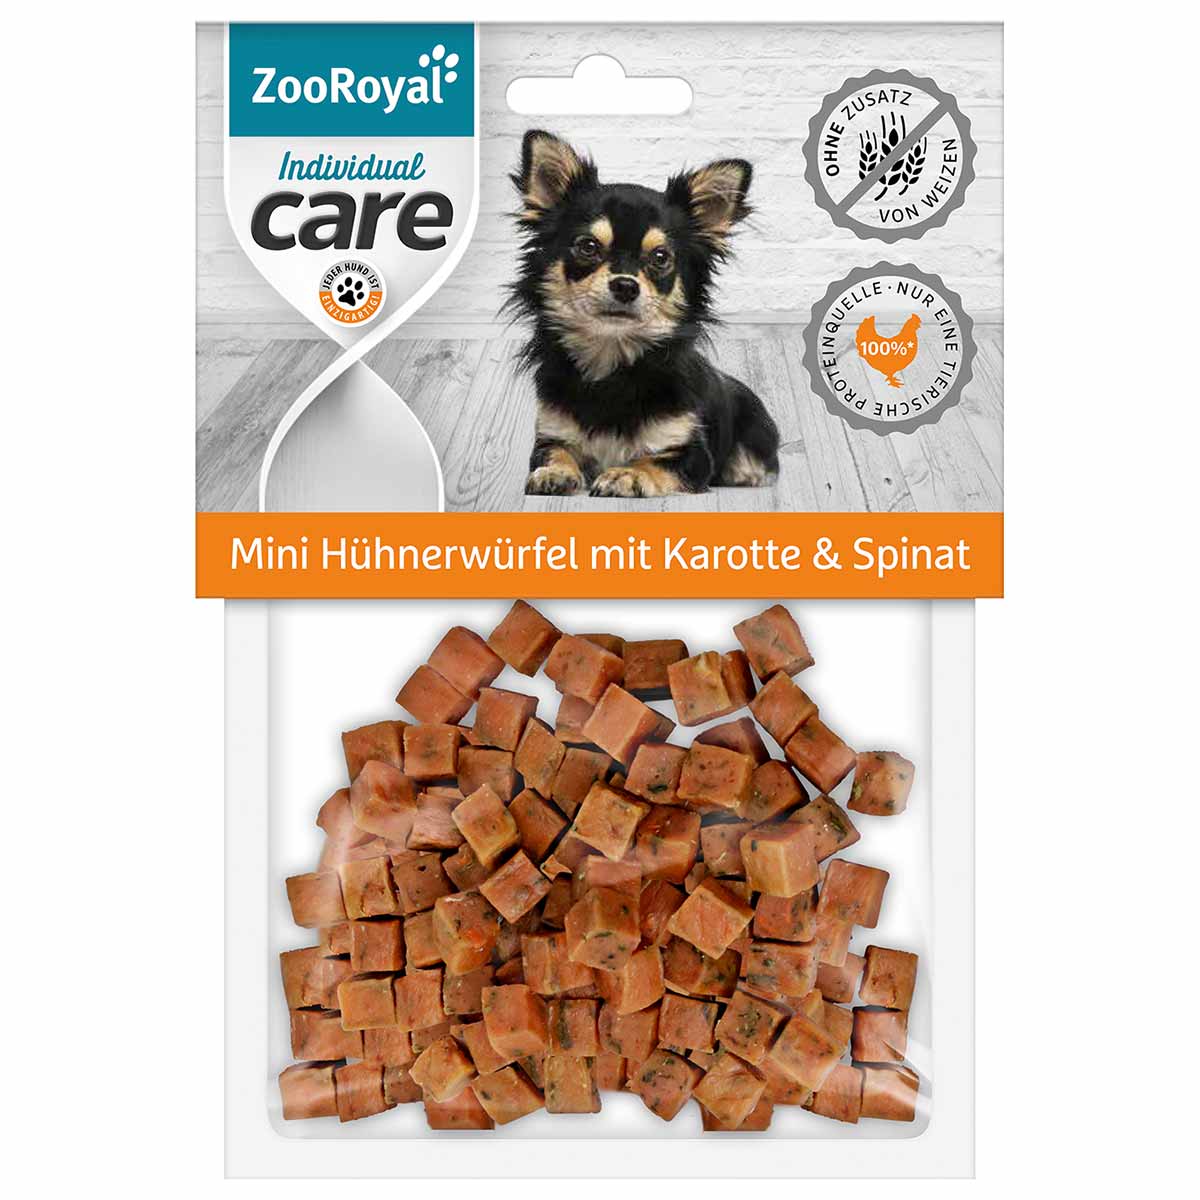 ZooRoyal Individual care Mini Hühnerwürfel mit Karotte & Spinat 70g 3x70g